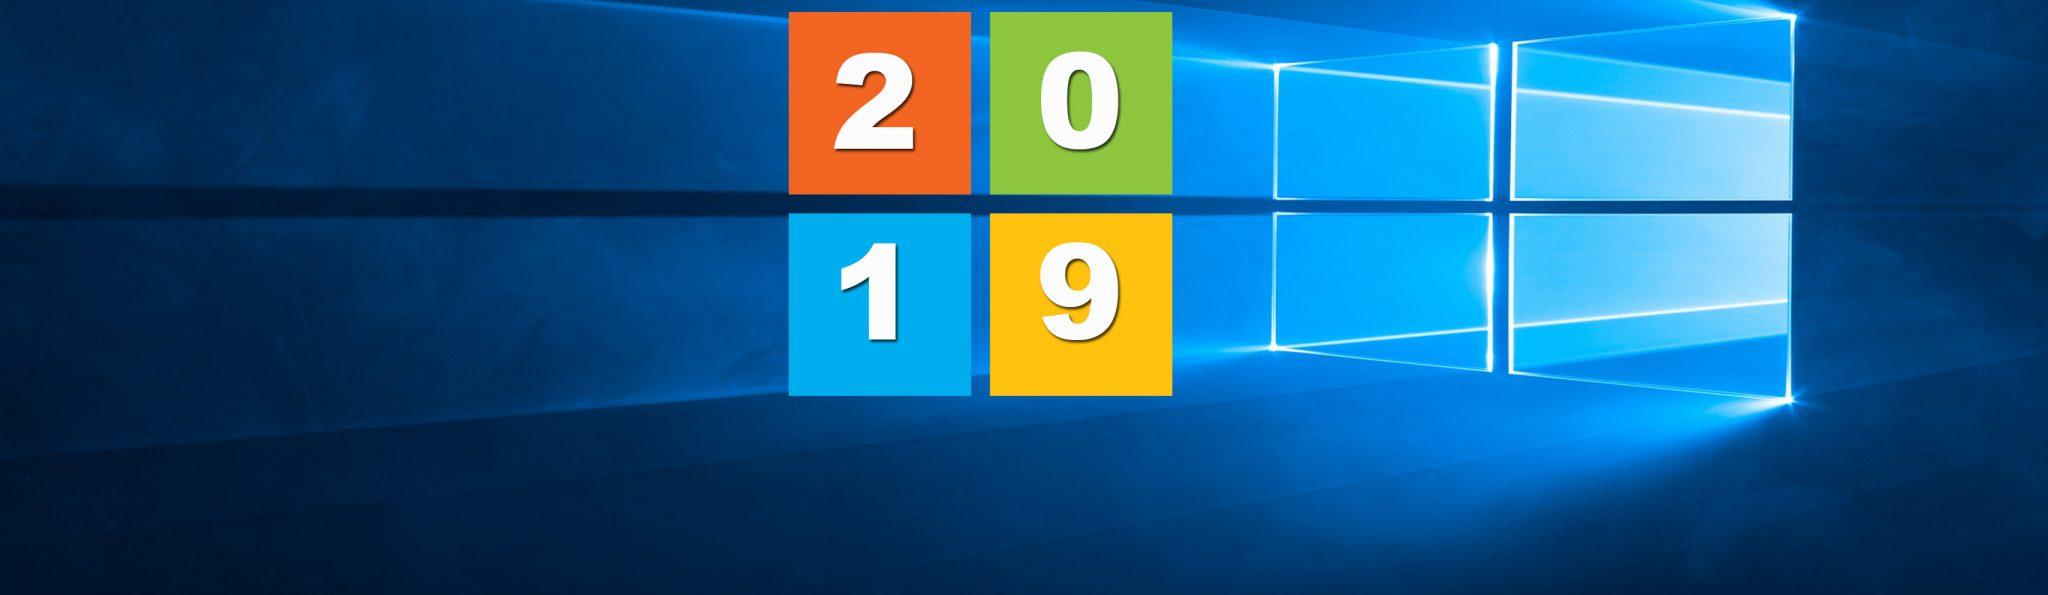 Microsoft announces updates for Windows Server 2019